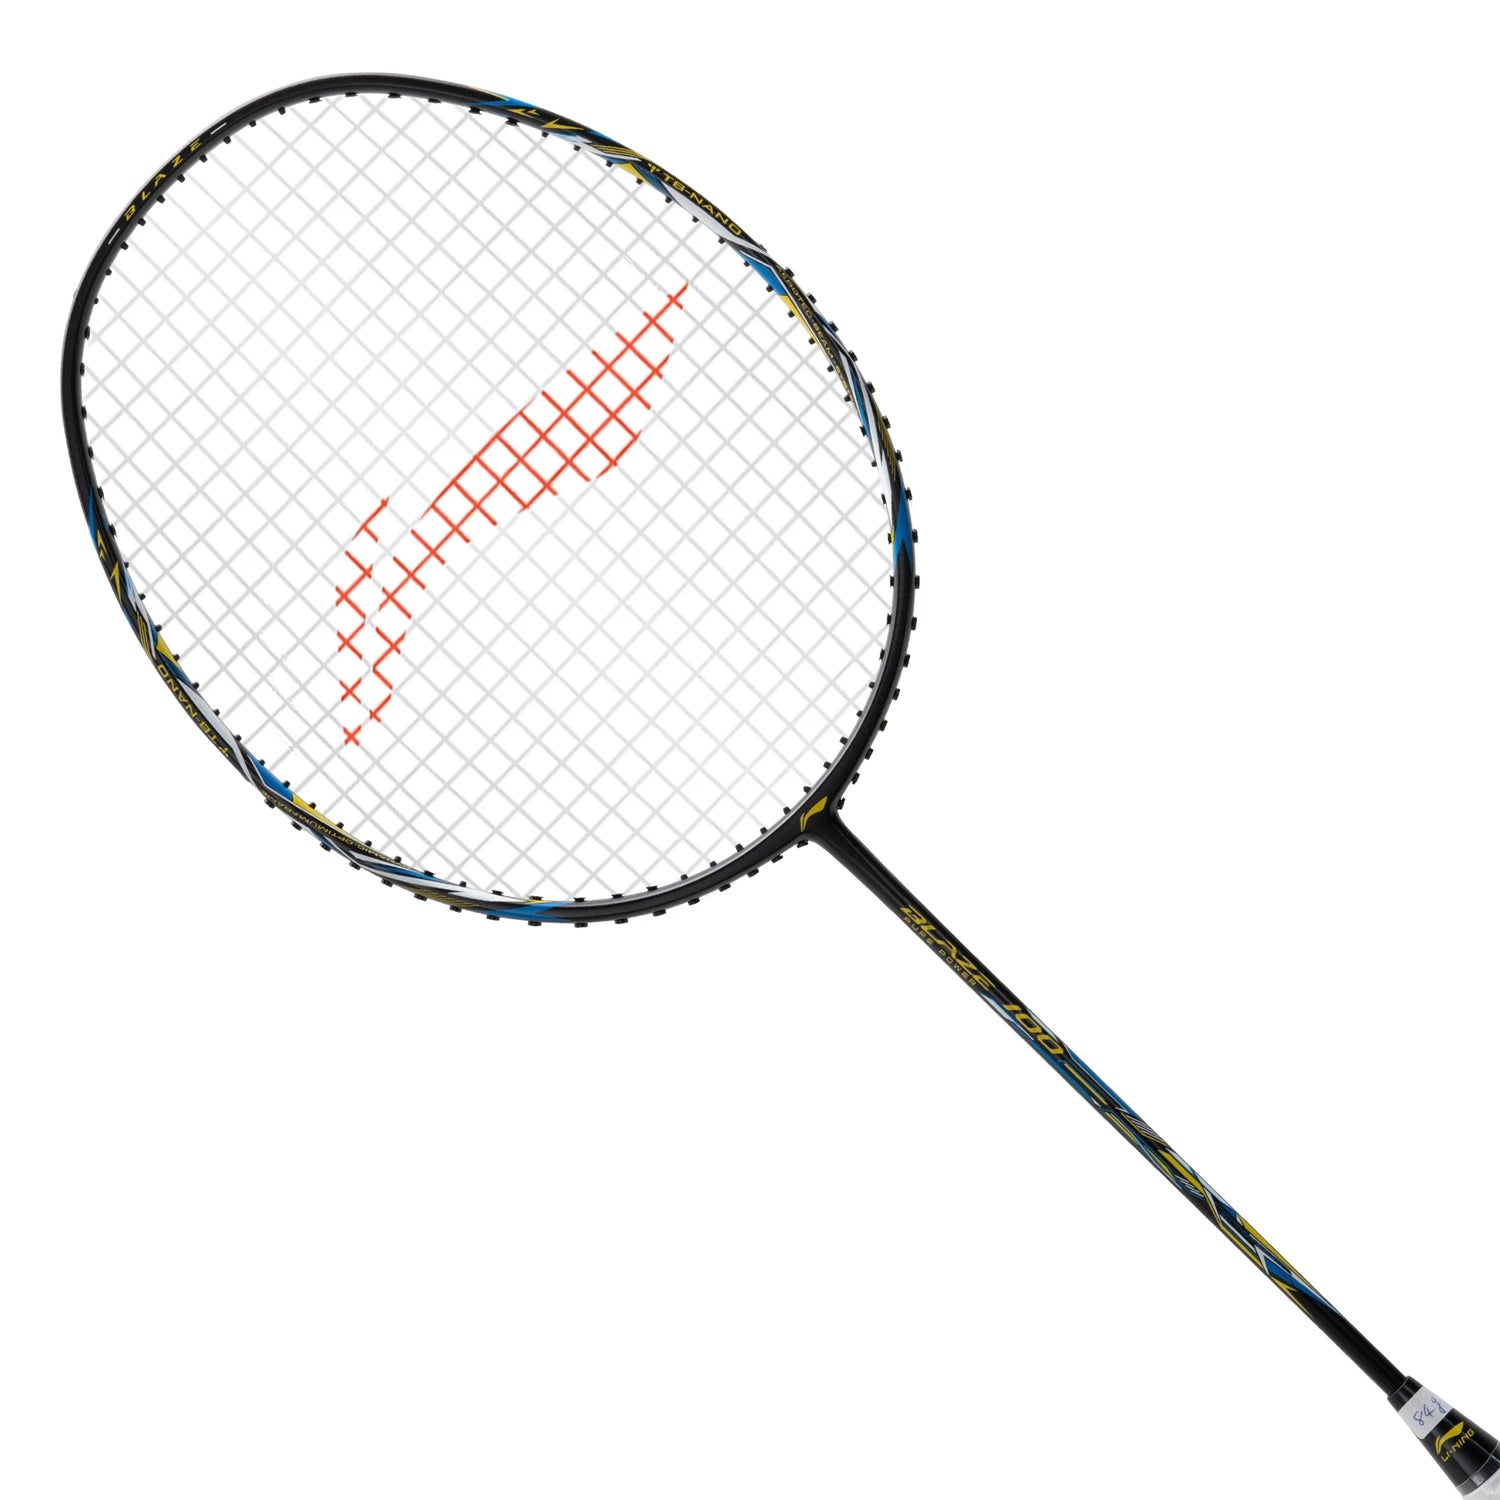 Li-Ning BLAZE 100 Strung Badminton Racquet, 78g - Best Price online Prokicksports.com